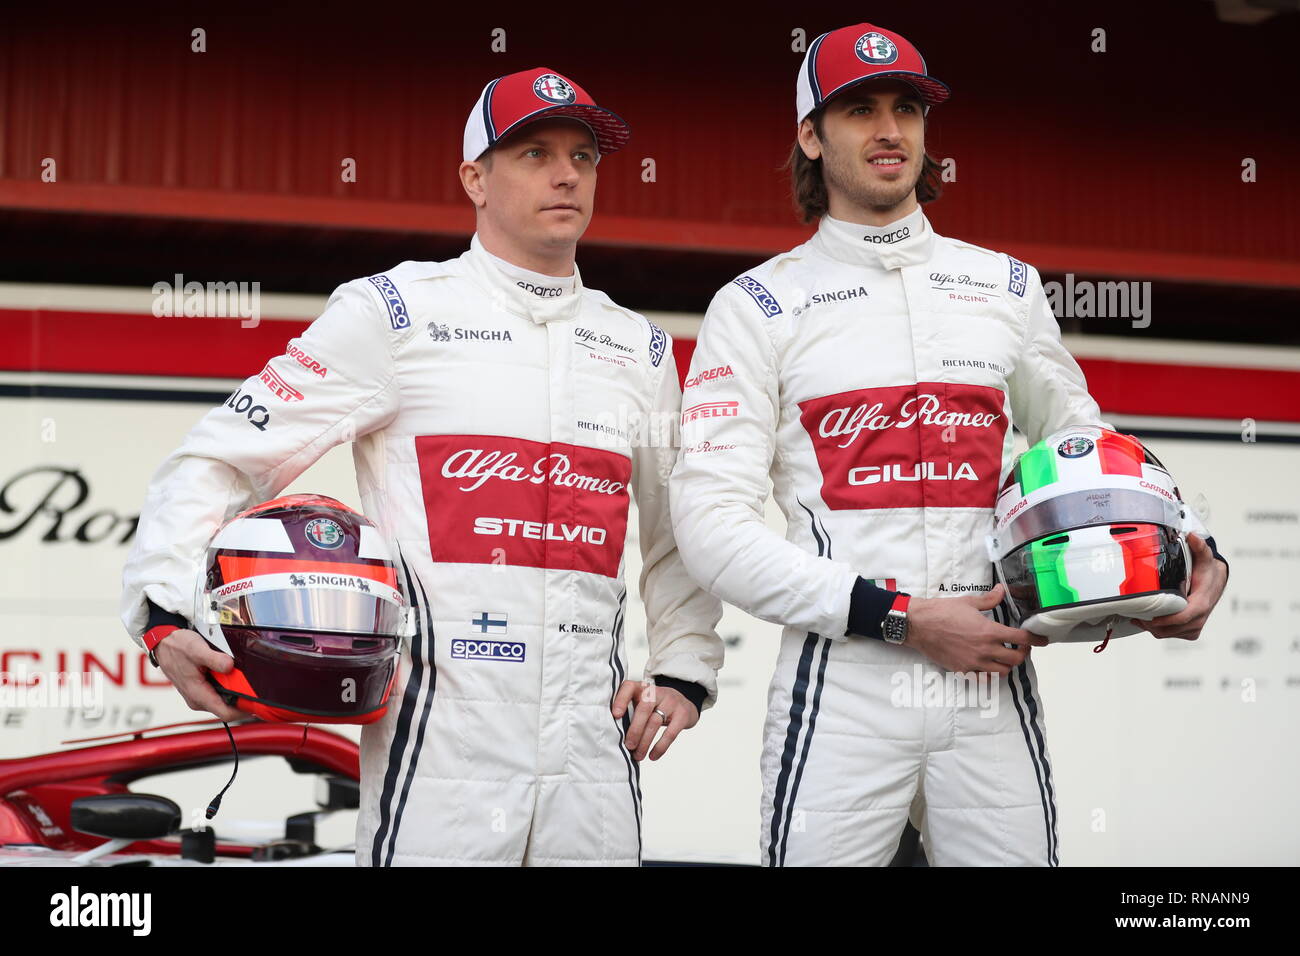 Drivers Kimi Raikkonen (left) and Antonio Giovinazzi during the new livery presentation of Alfa Romeo's F1 car at the Circuit de Barcelona-Catalunya. Stock Photo